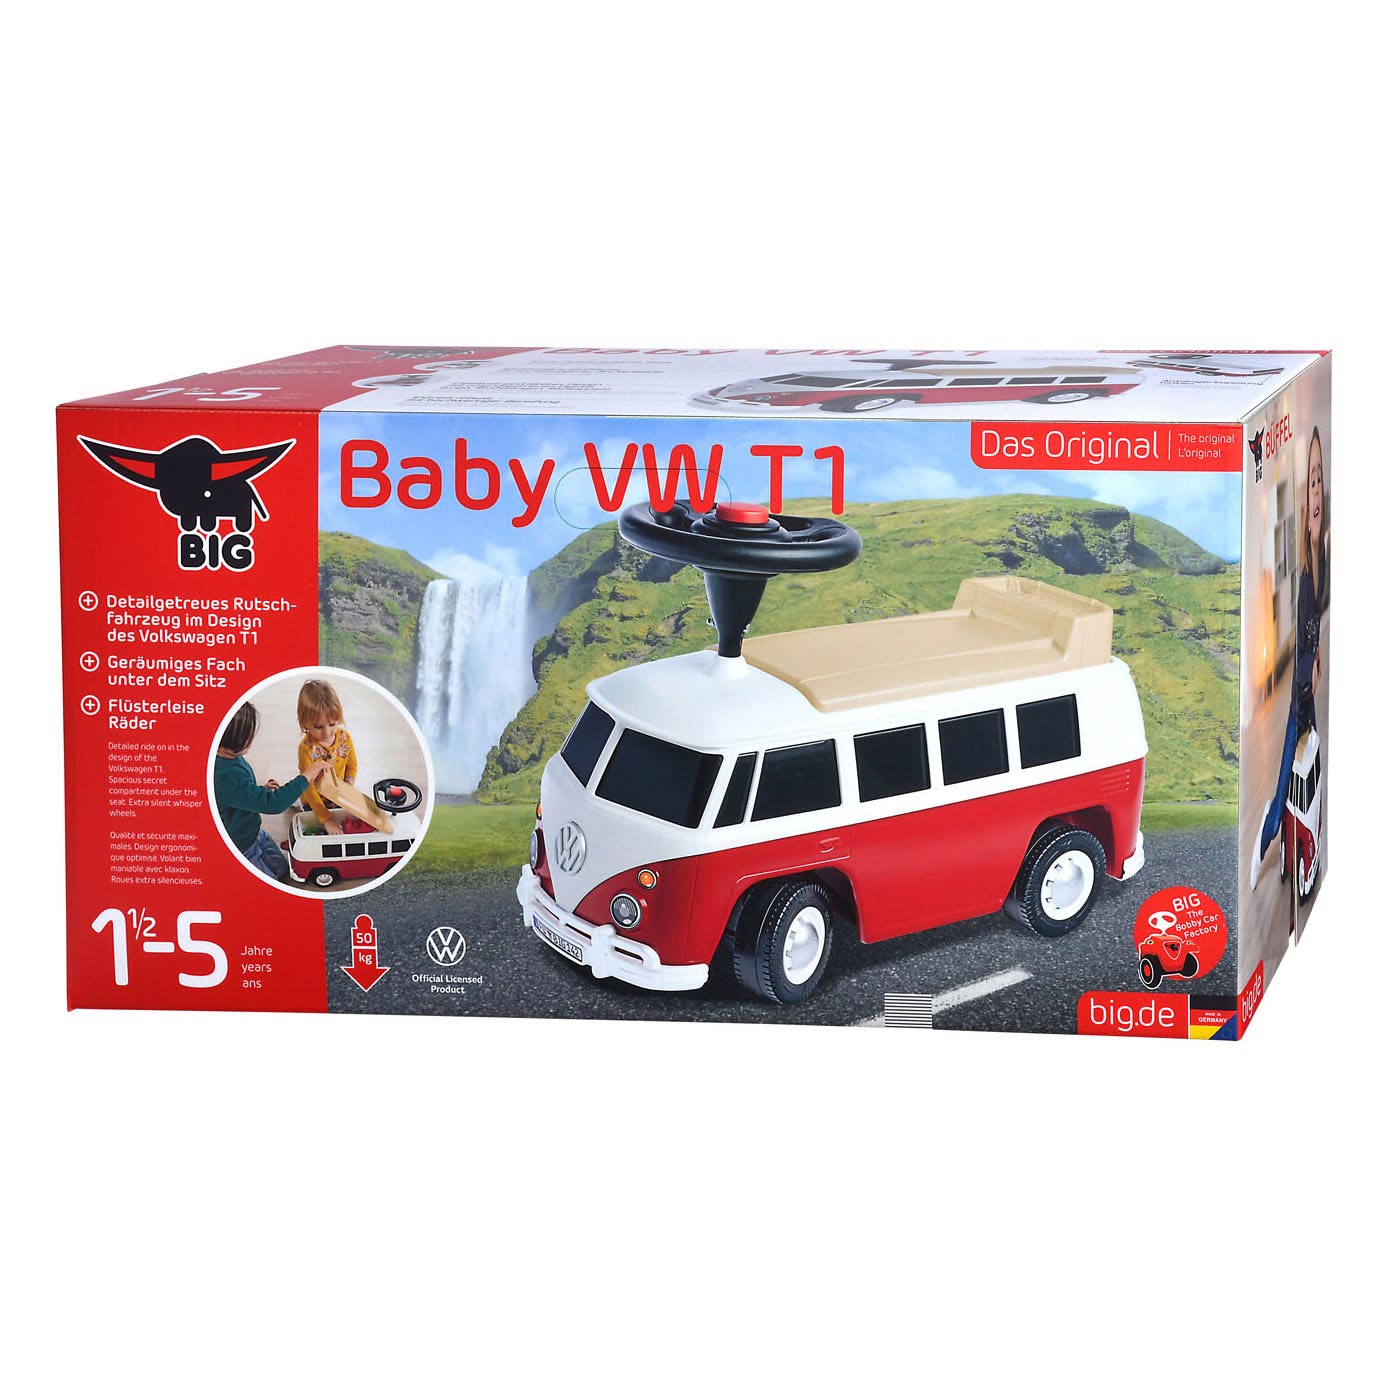 BIG Baby VW T1 Ride on car